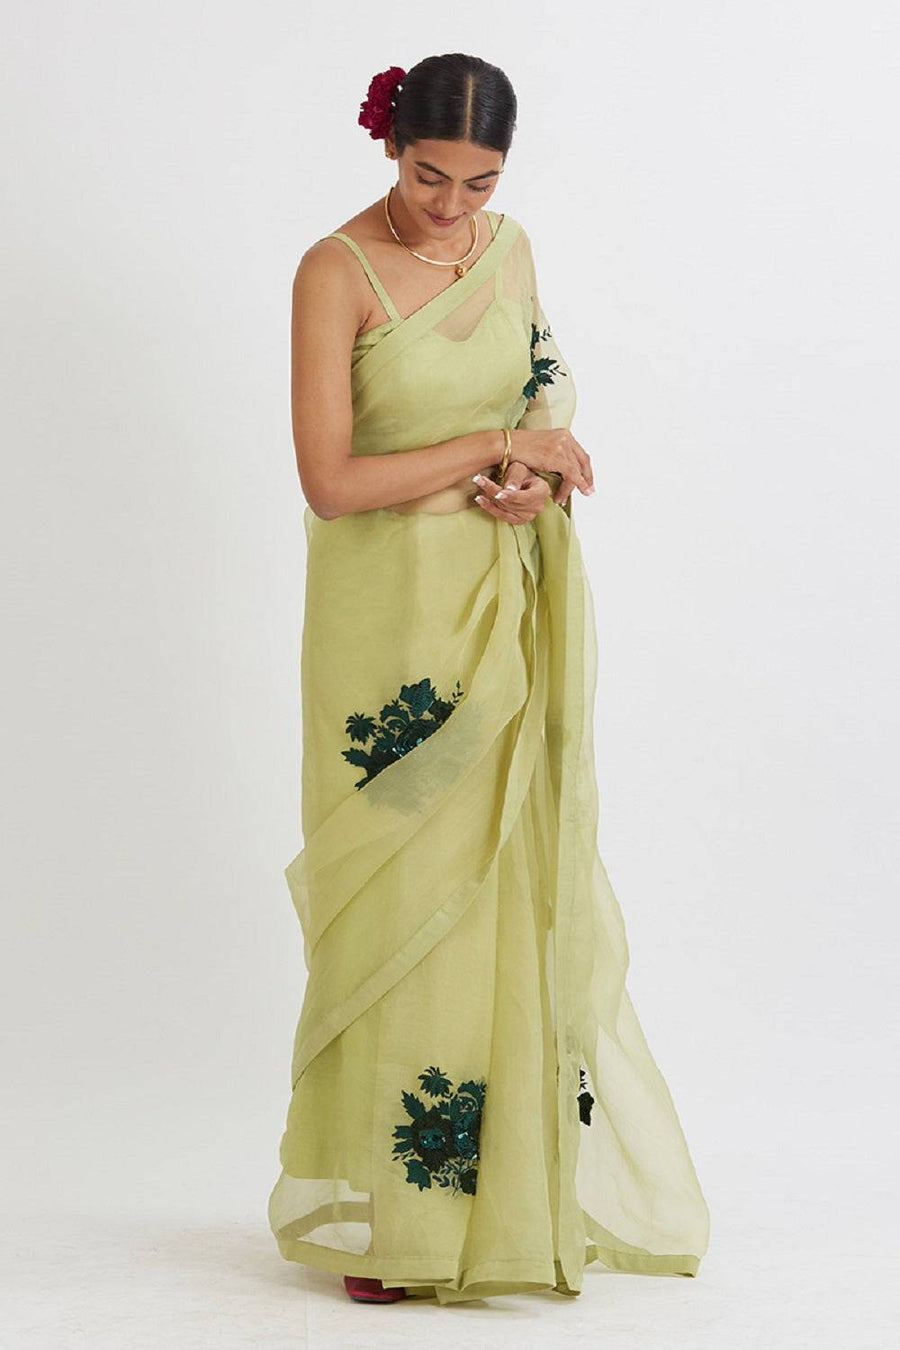 Mint Green Aradhana Saree - WaliaJones